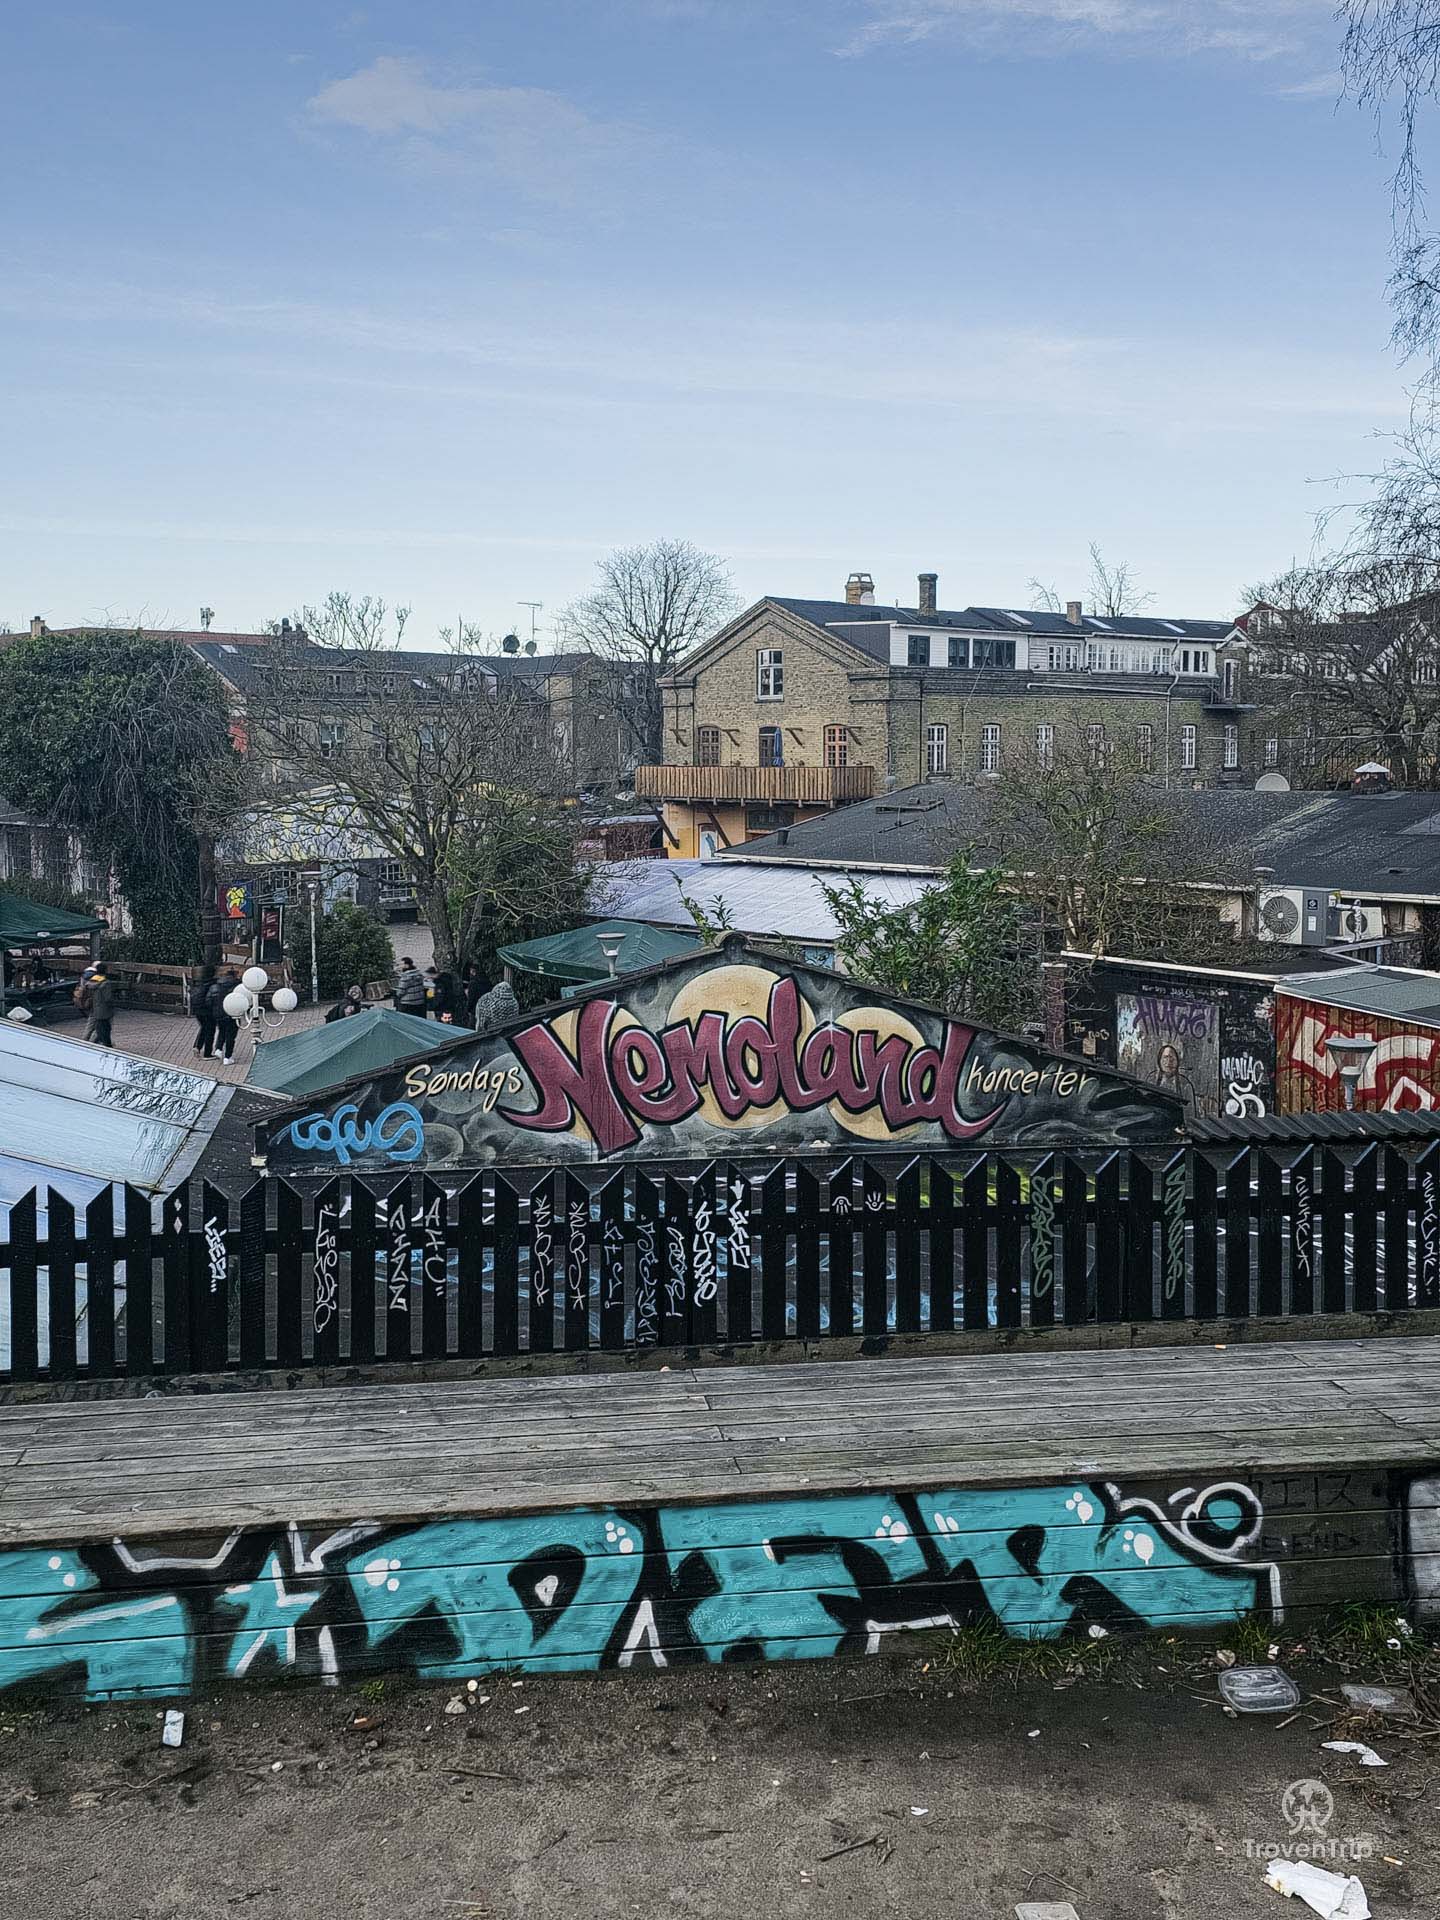 Nemoland Freetown Christiania in Copenhagen